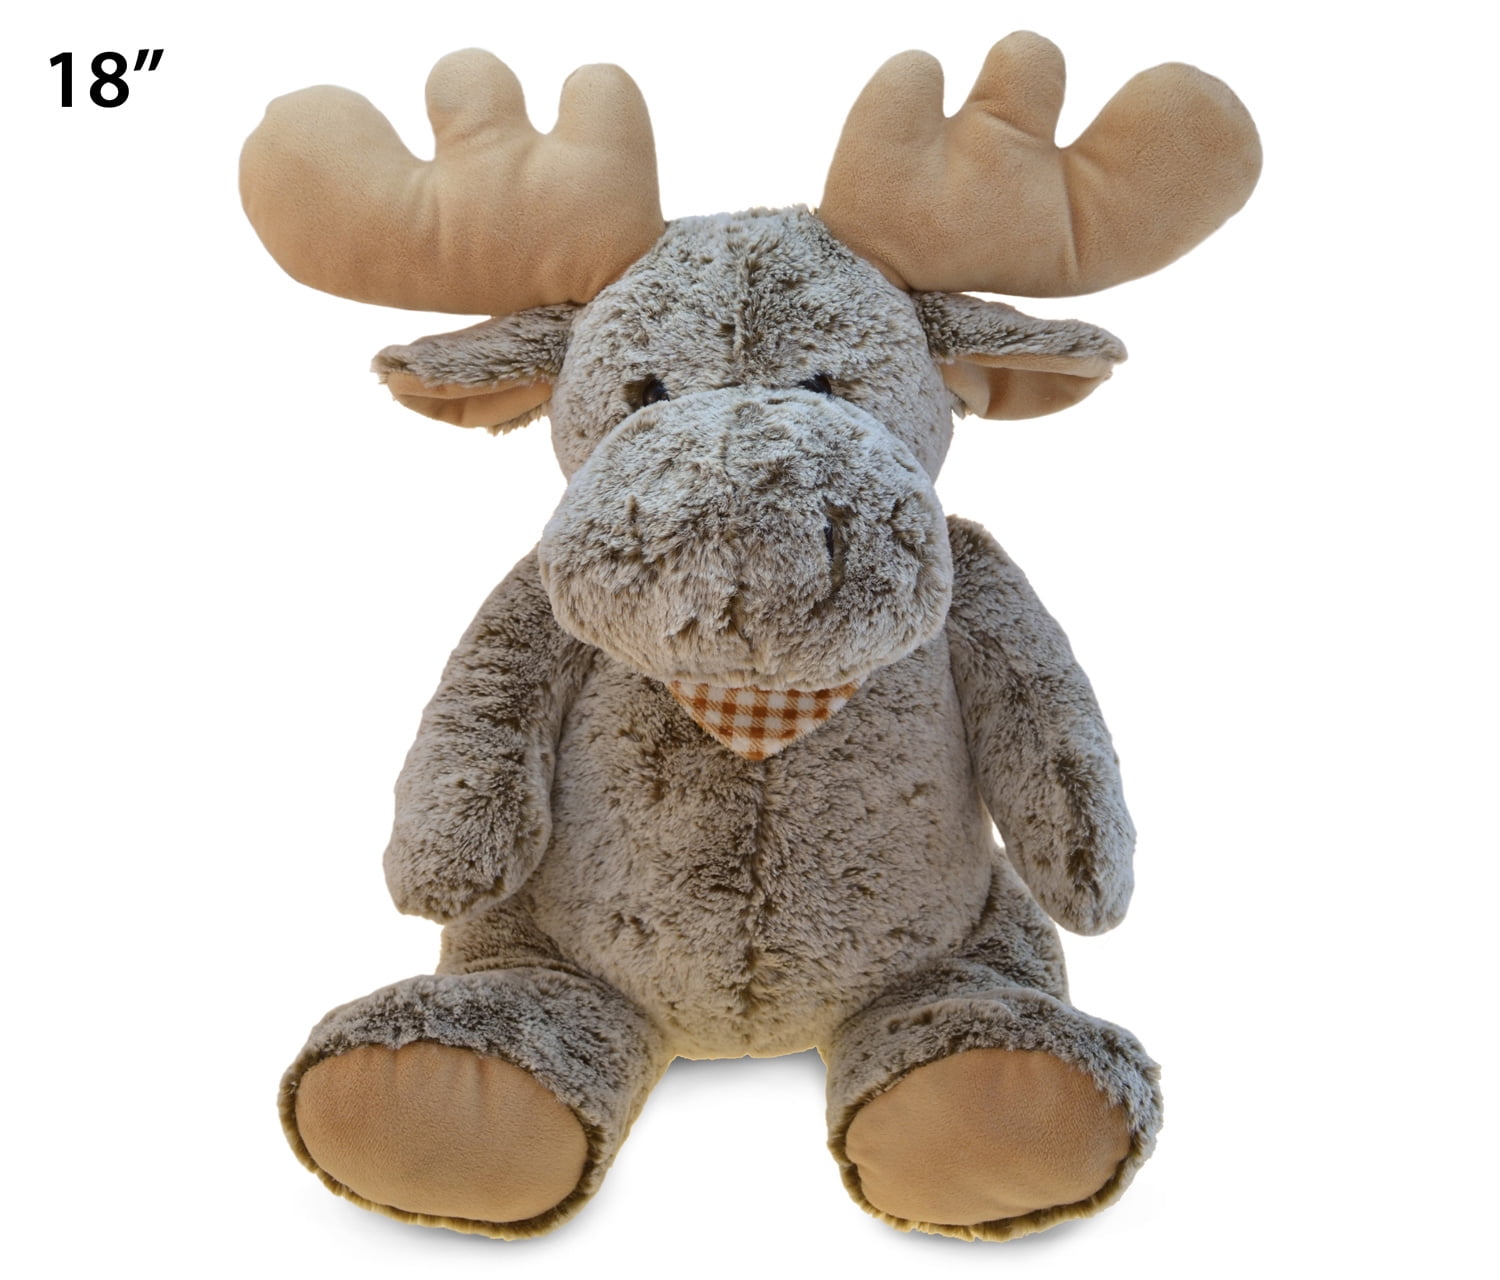 Mary Meyer Sweet Rascals 9" Marlon Moose Plush Stuffed Animal Toy